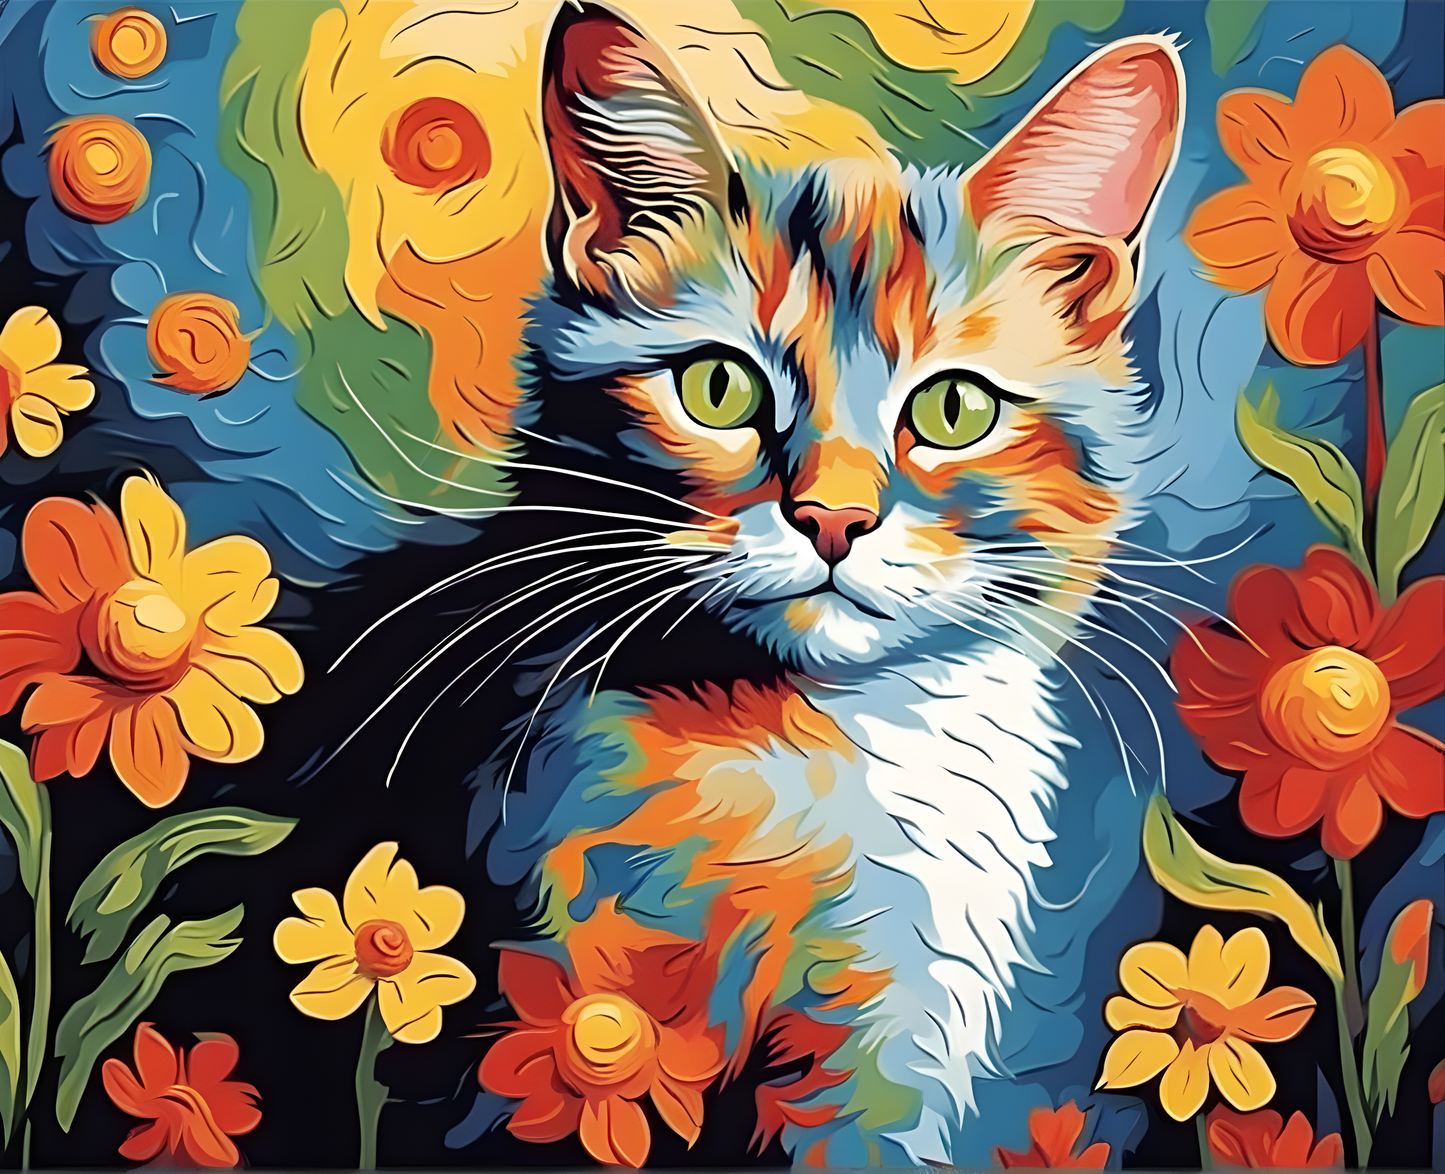 Colorful Cat (4) - Van-Go Paint-By-Number Kit